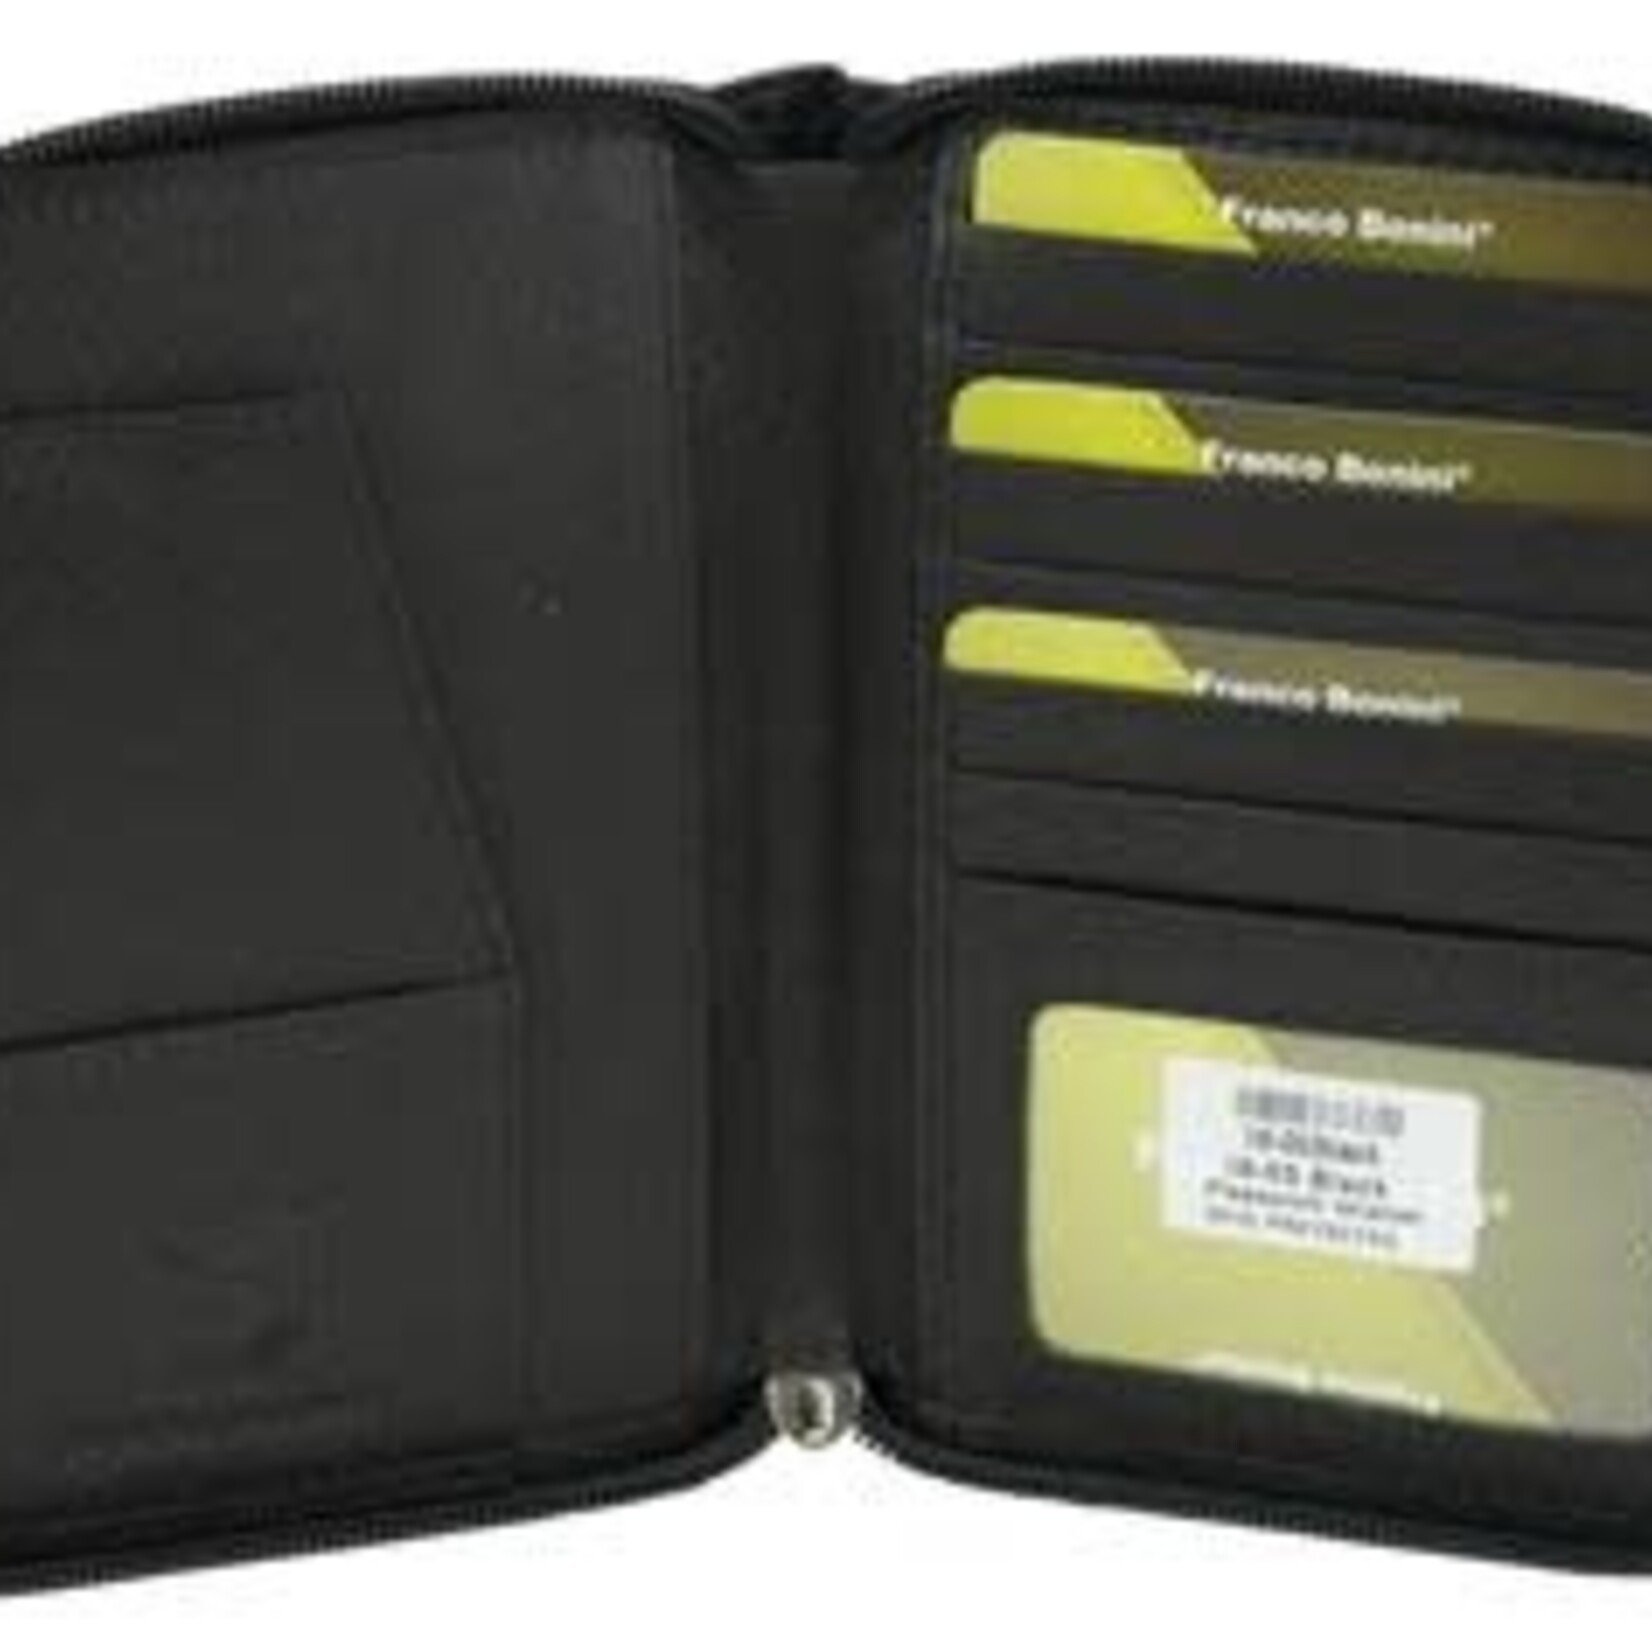 Franco Bonini Black Leather Passport Wallet